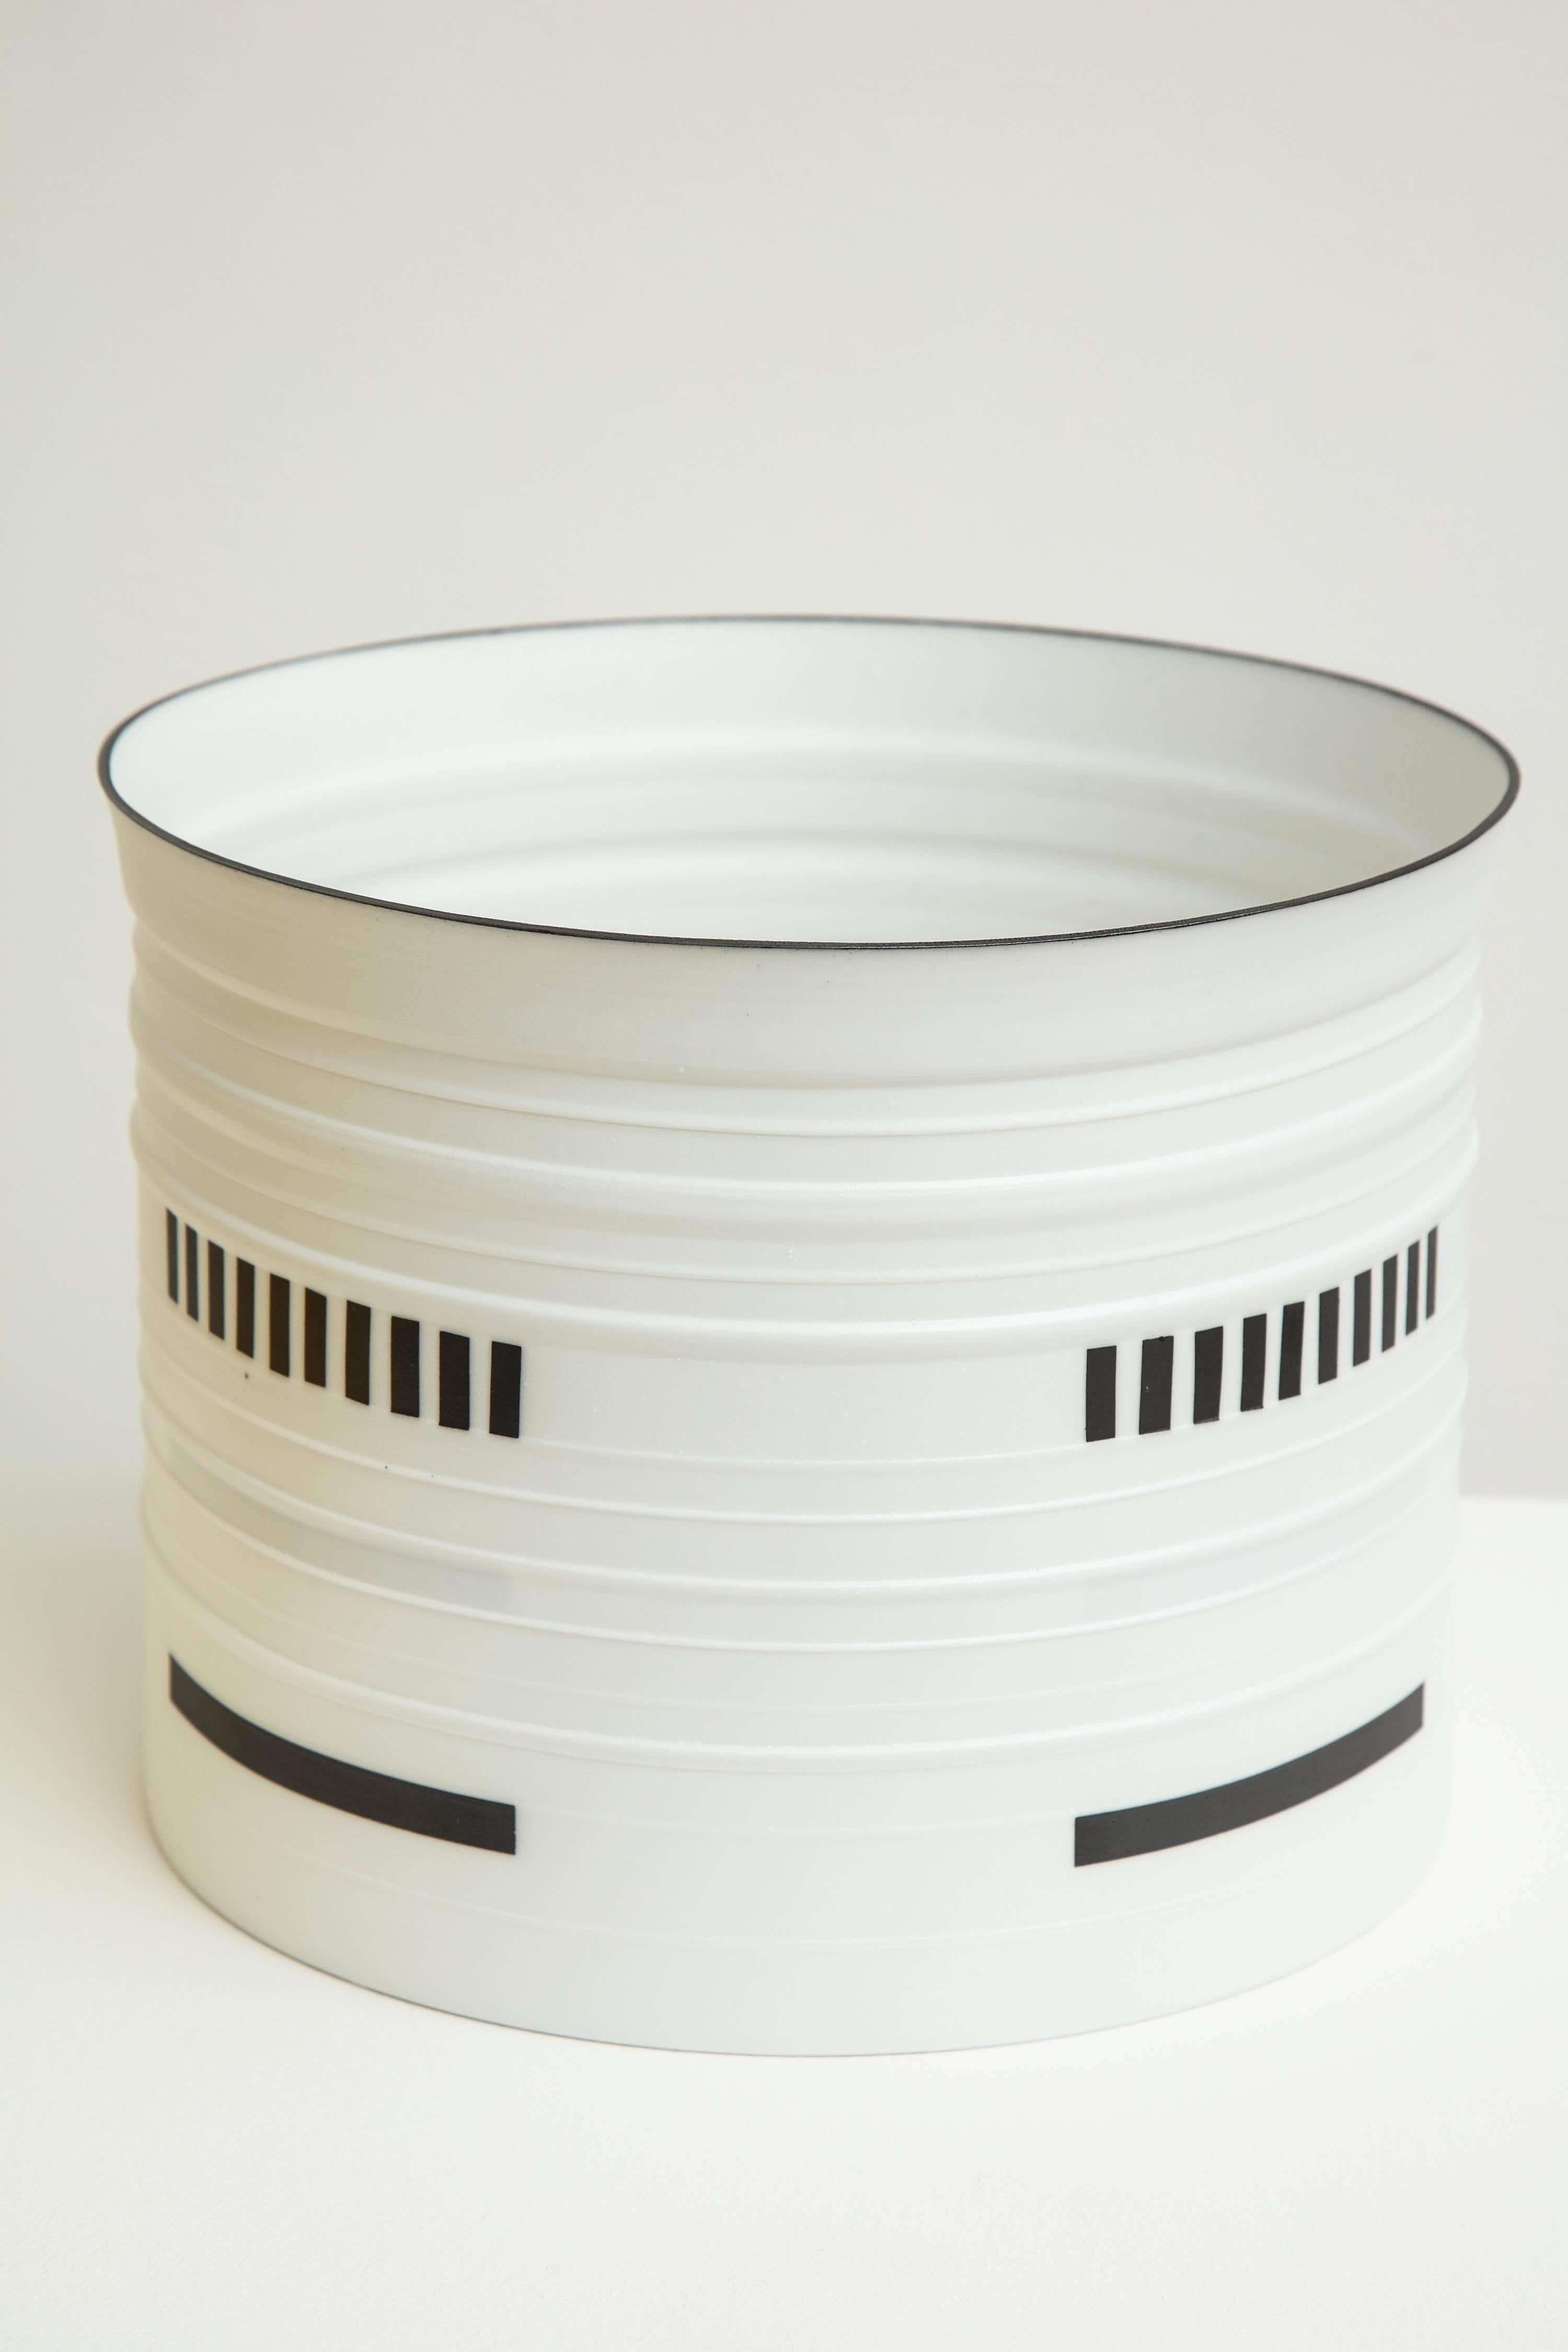 Bodil Manz black and white porcelain vessel, made in Denmark